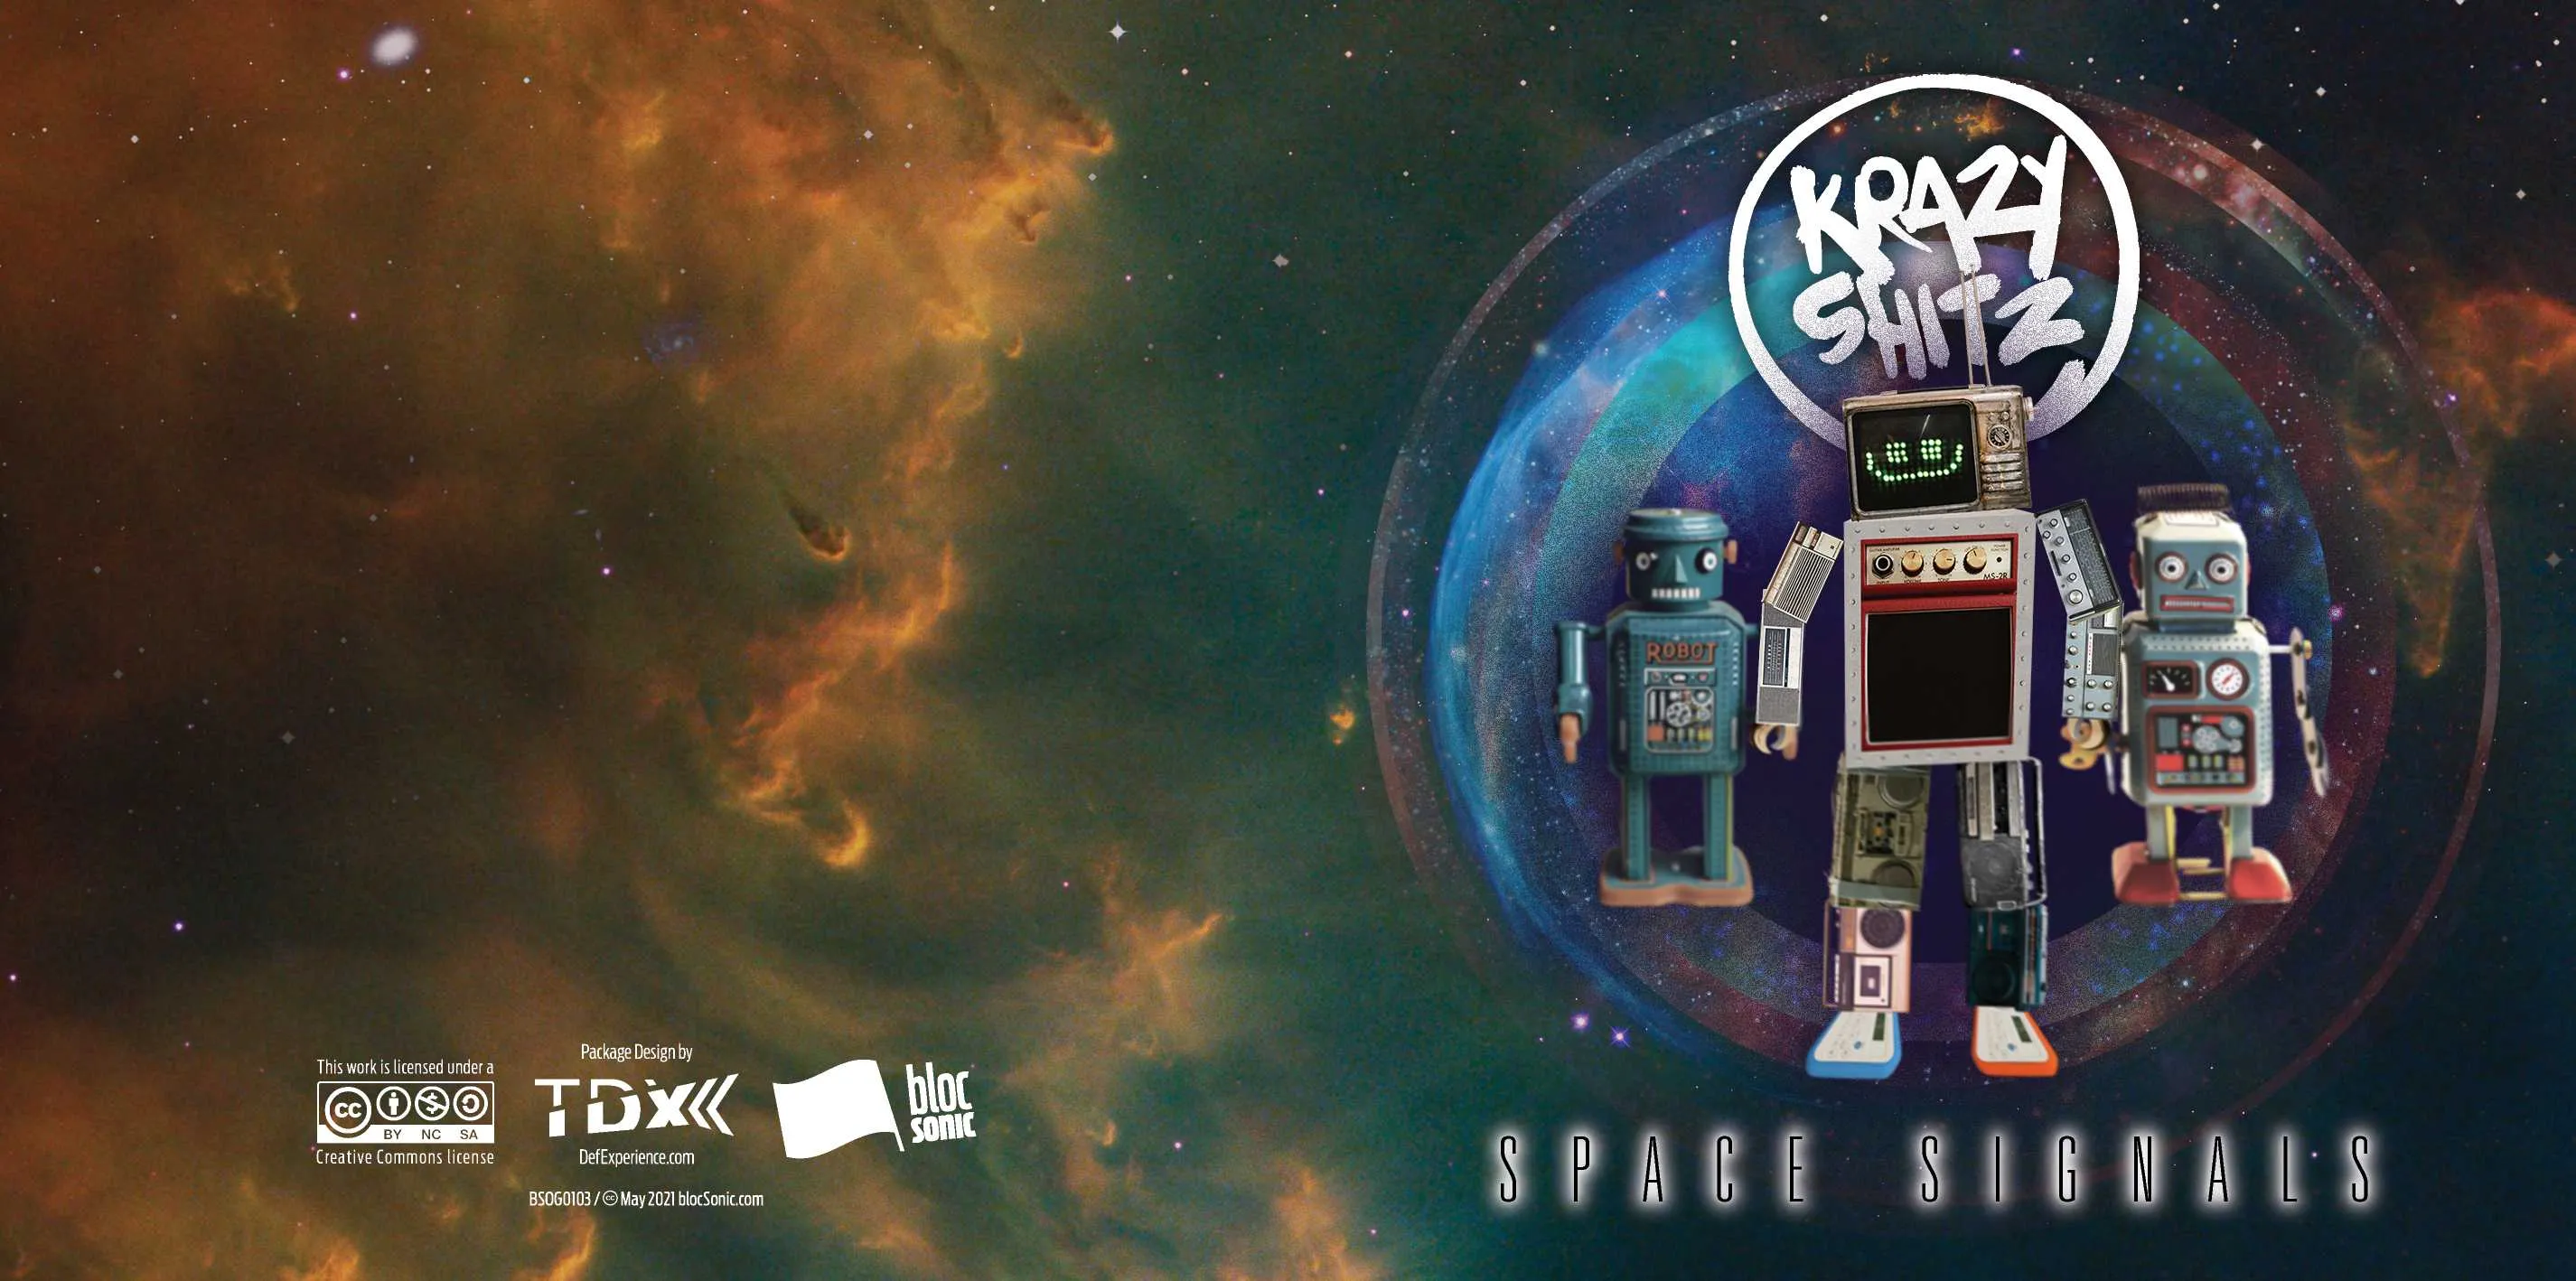 Album insert for “Space Signals” by Krazy Shitz